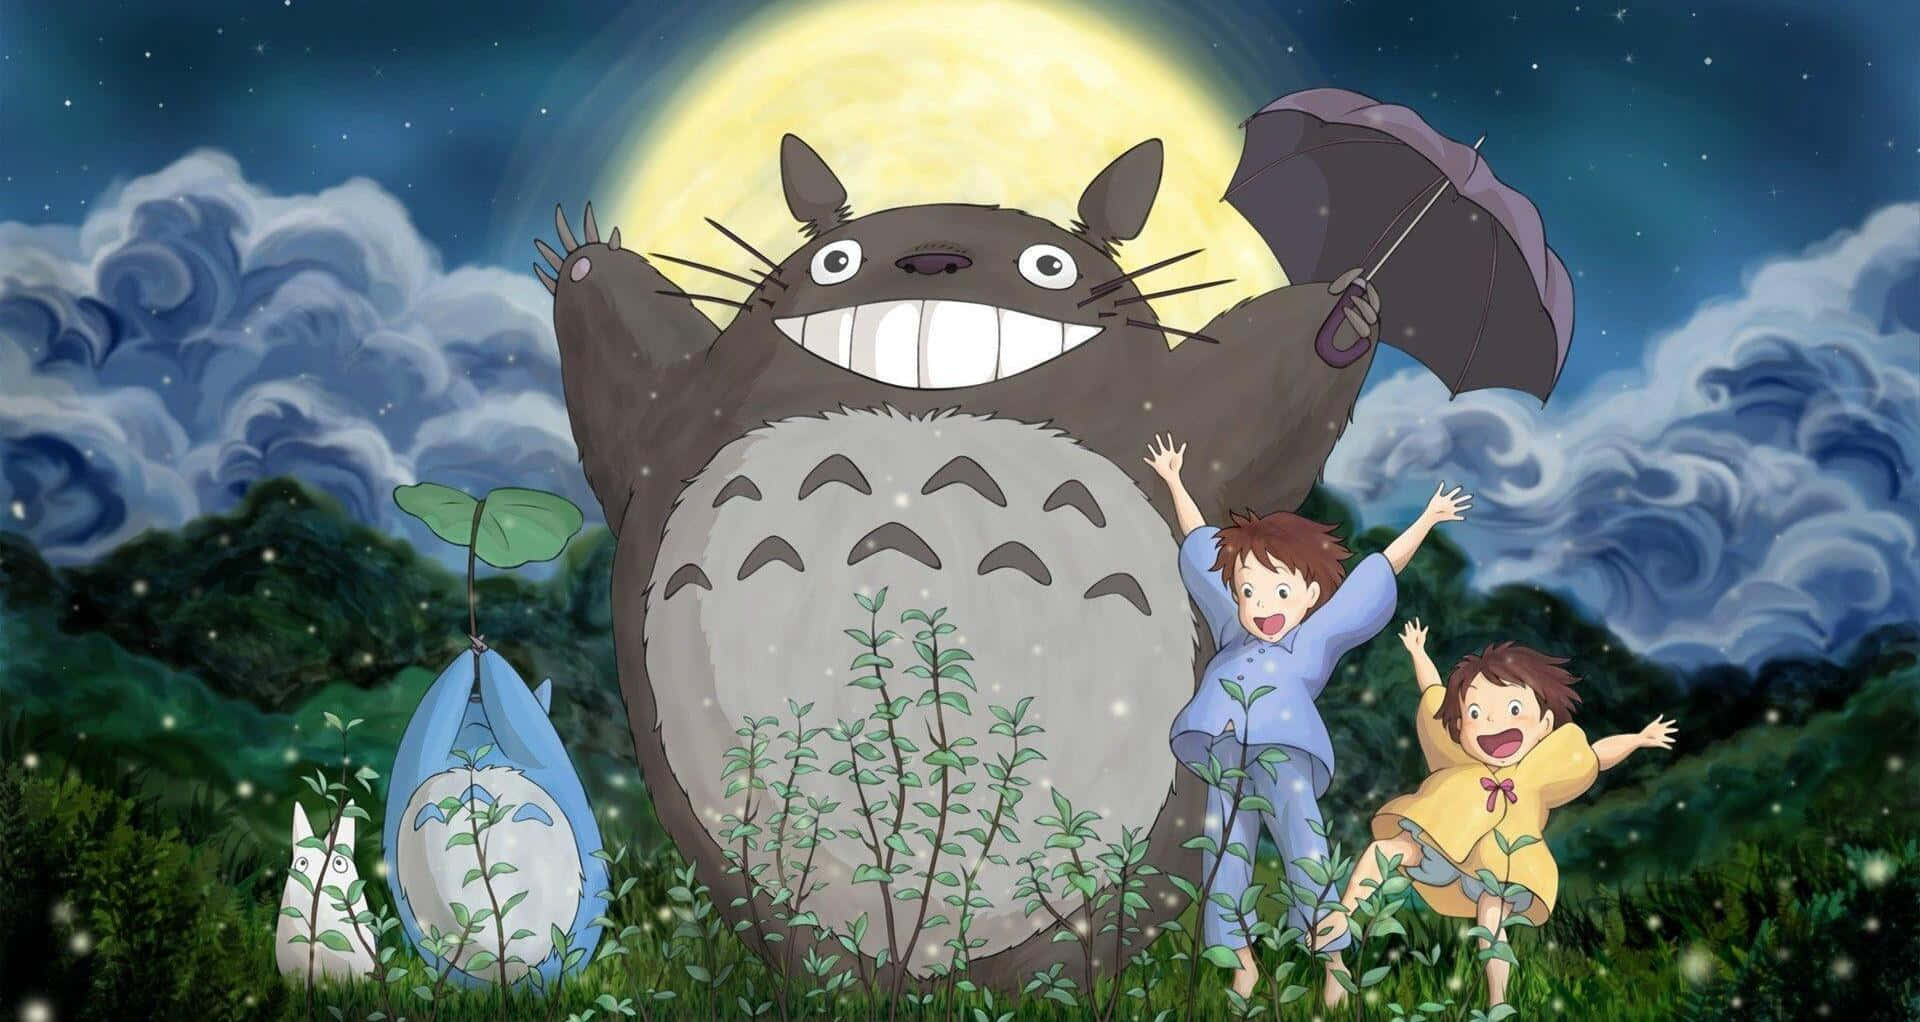 Spirited Away: Meet Totoro